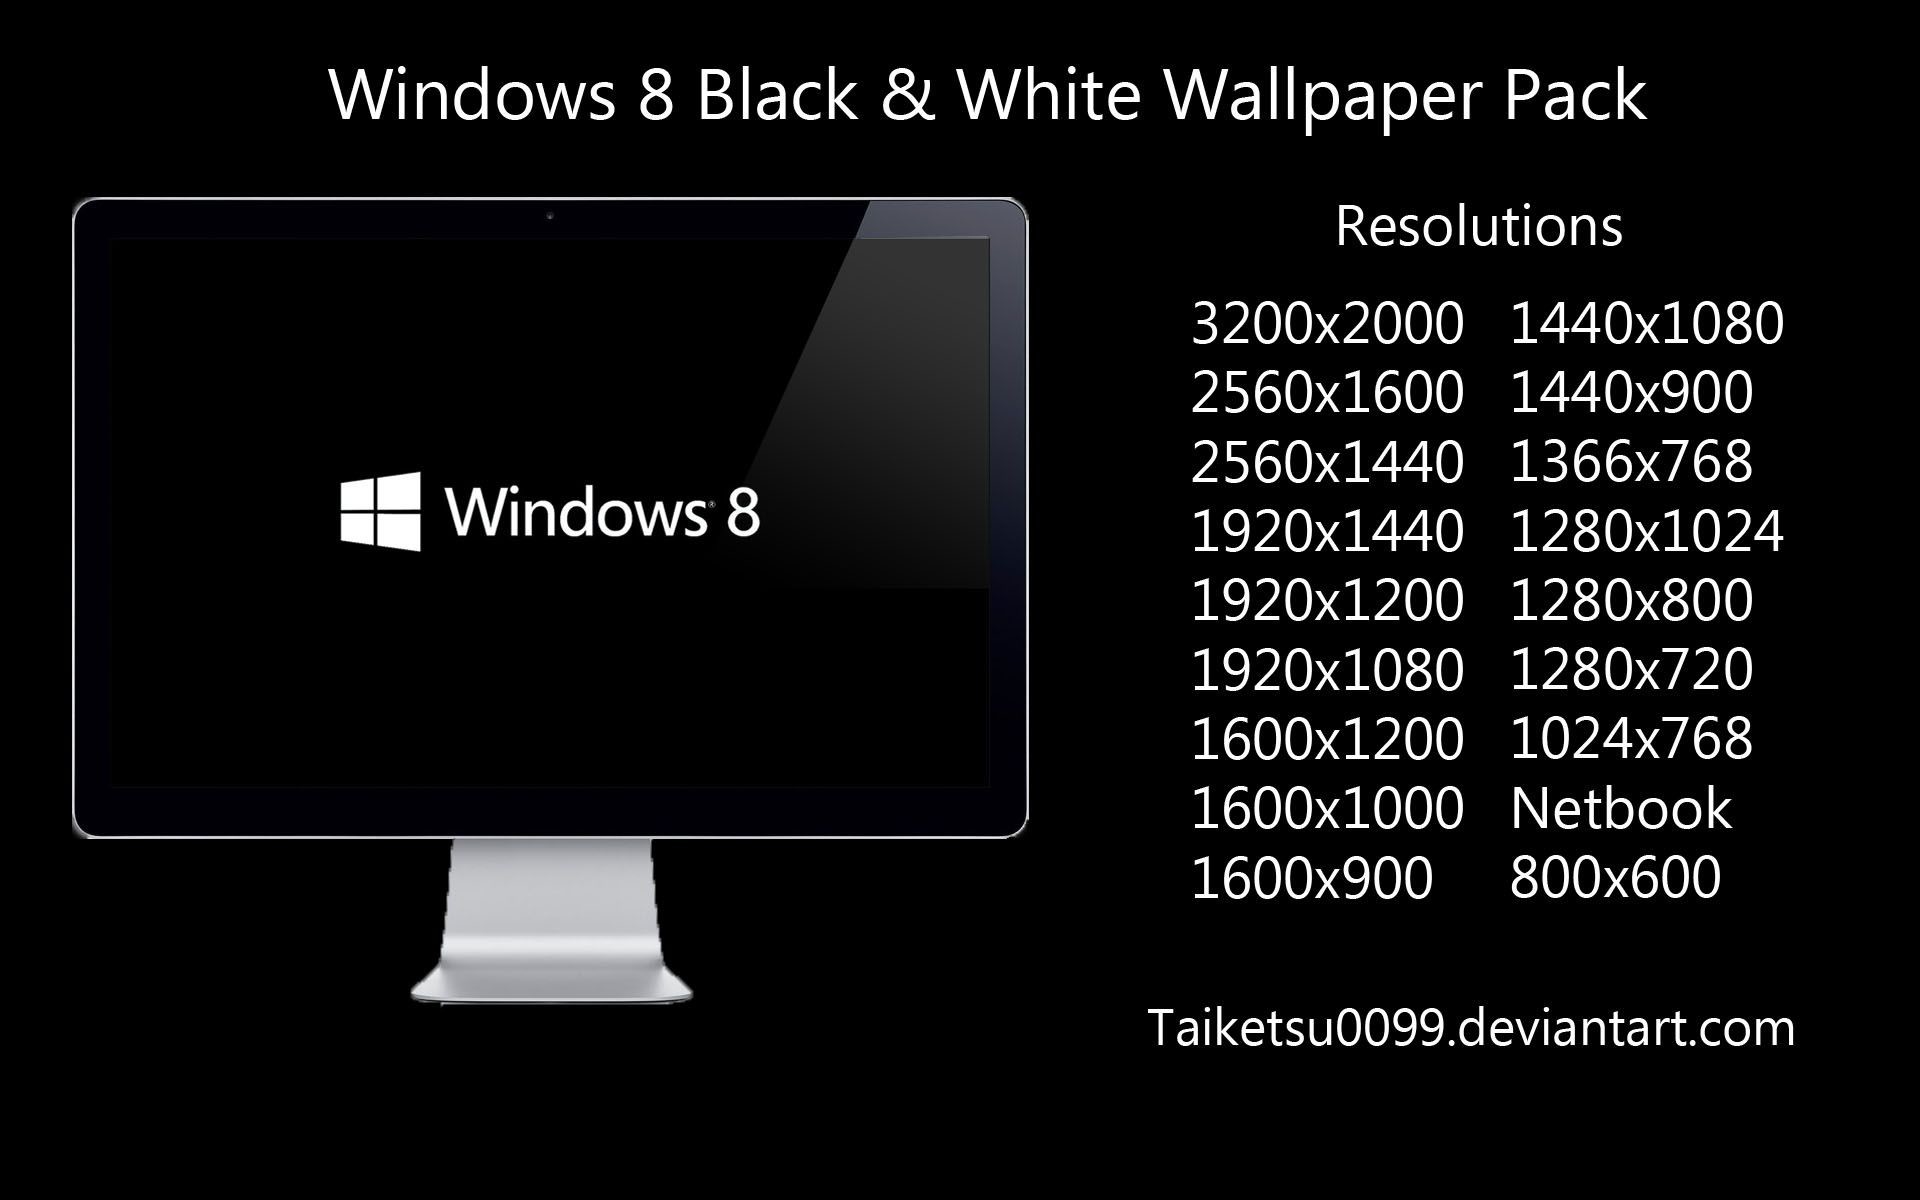 1920x1200 Windows 8 Black and White Wallpaper Pack by Taiketsu0099 on DeviantArt